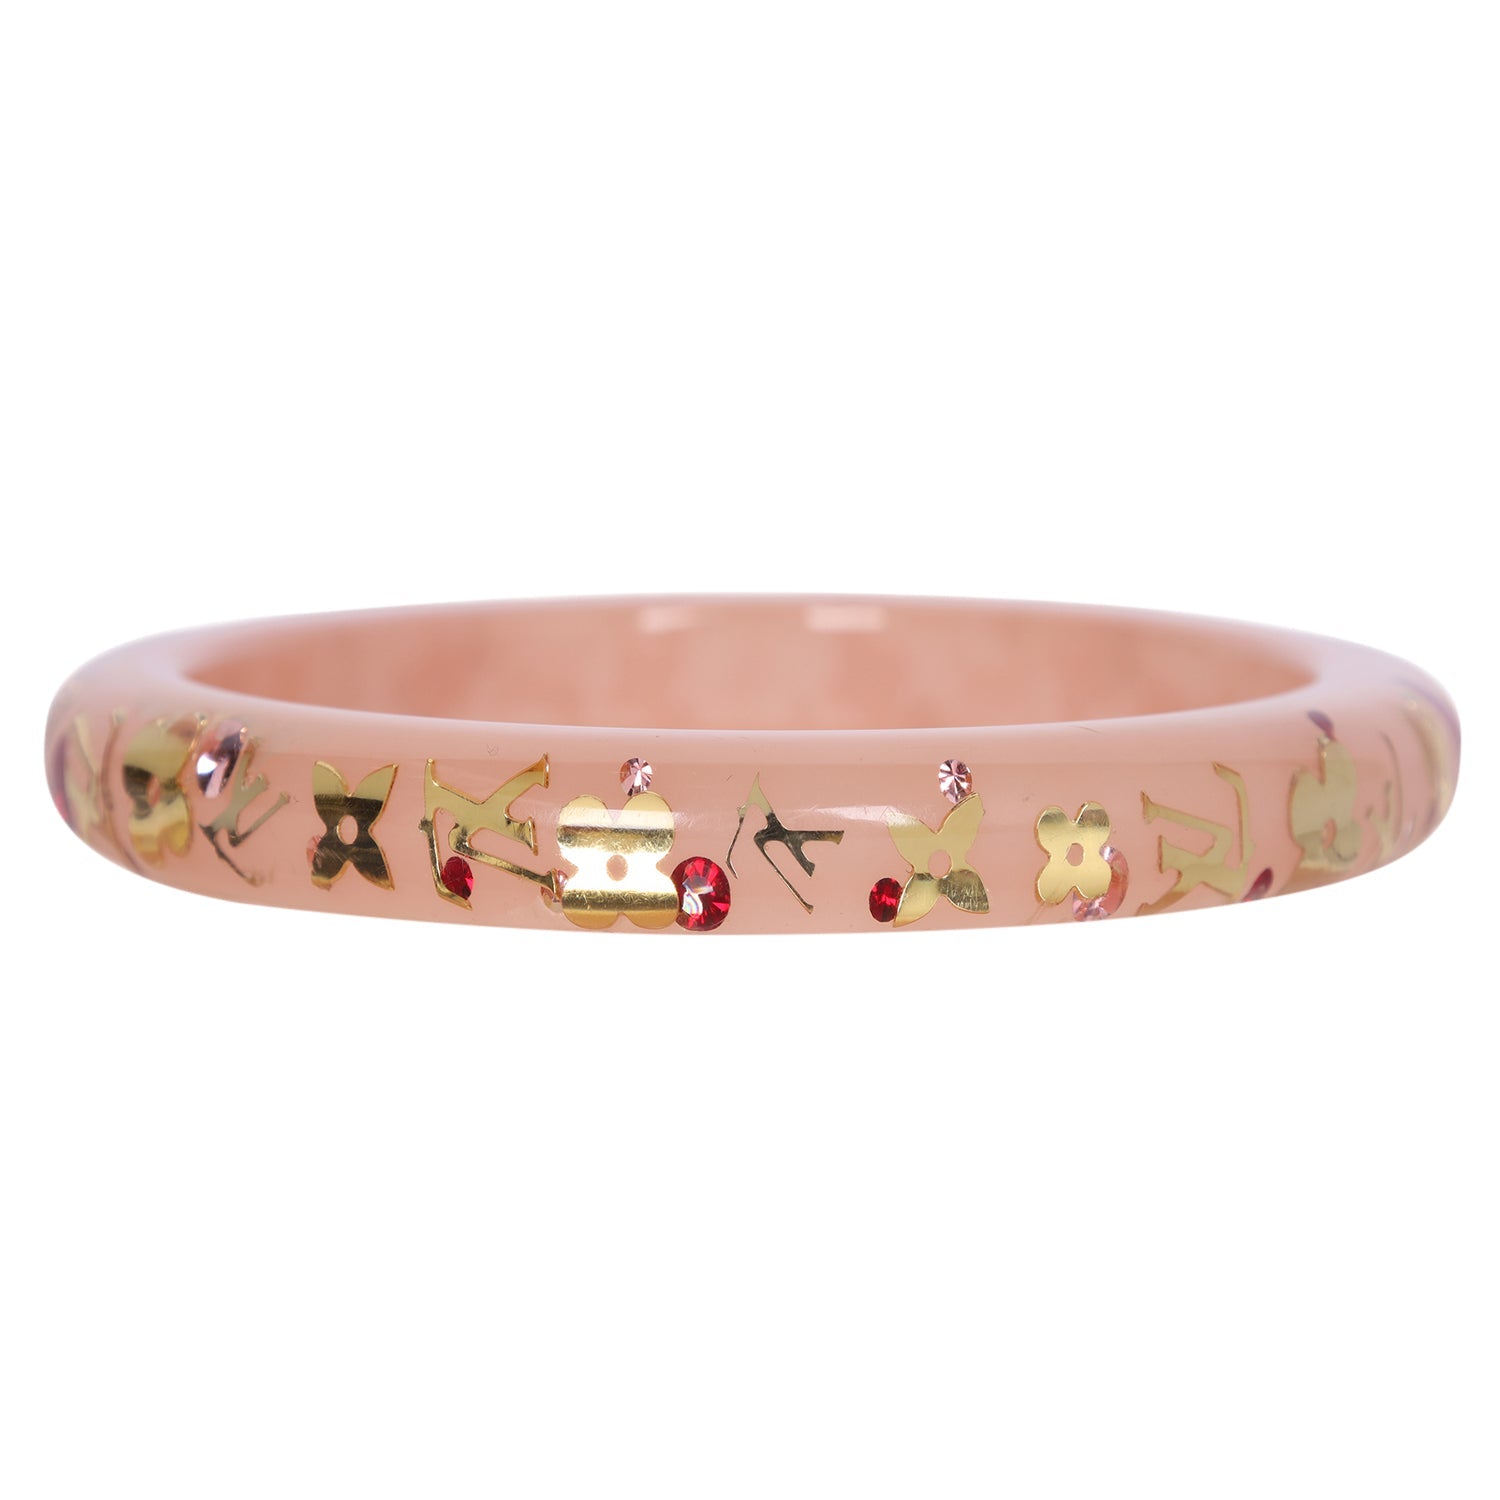 Pink Enamel Bangle Bracelet (Authentic Pre-Owned)